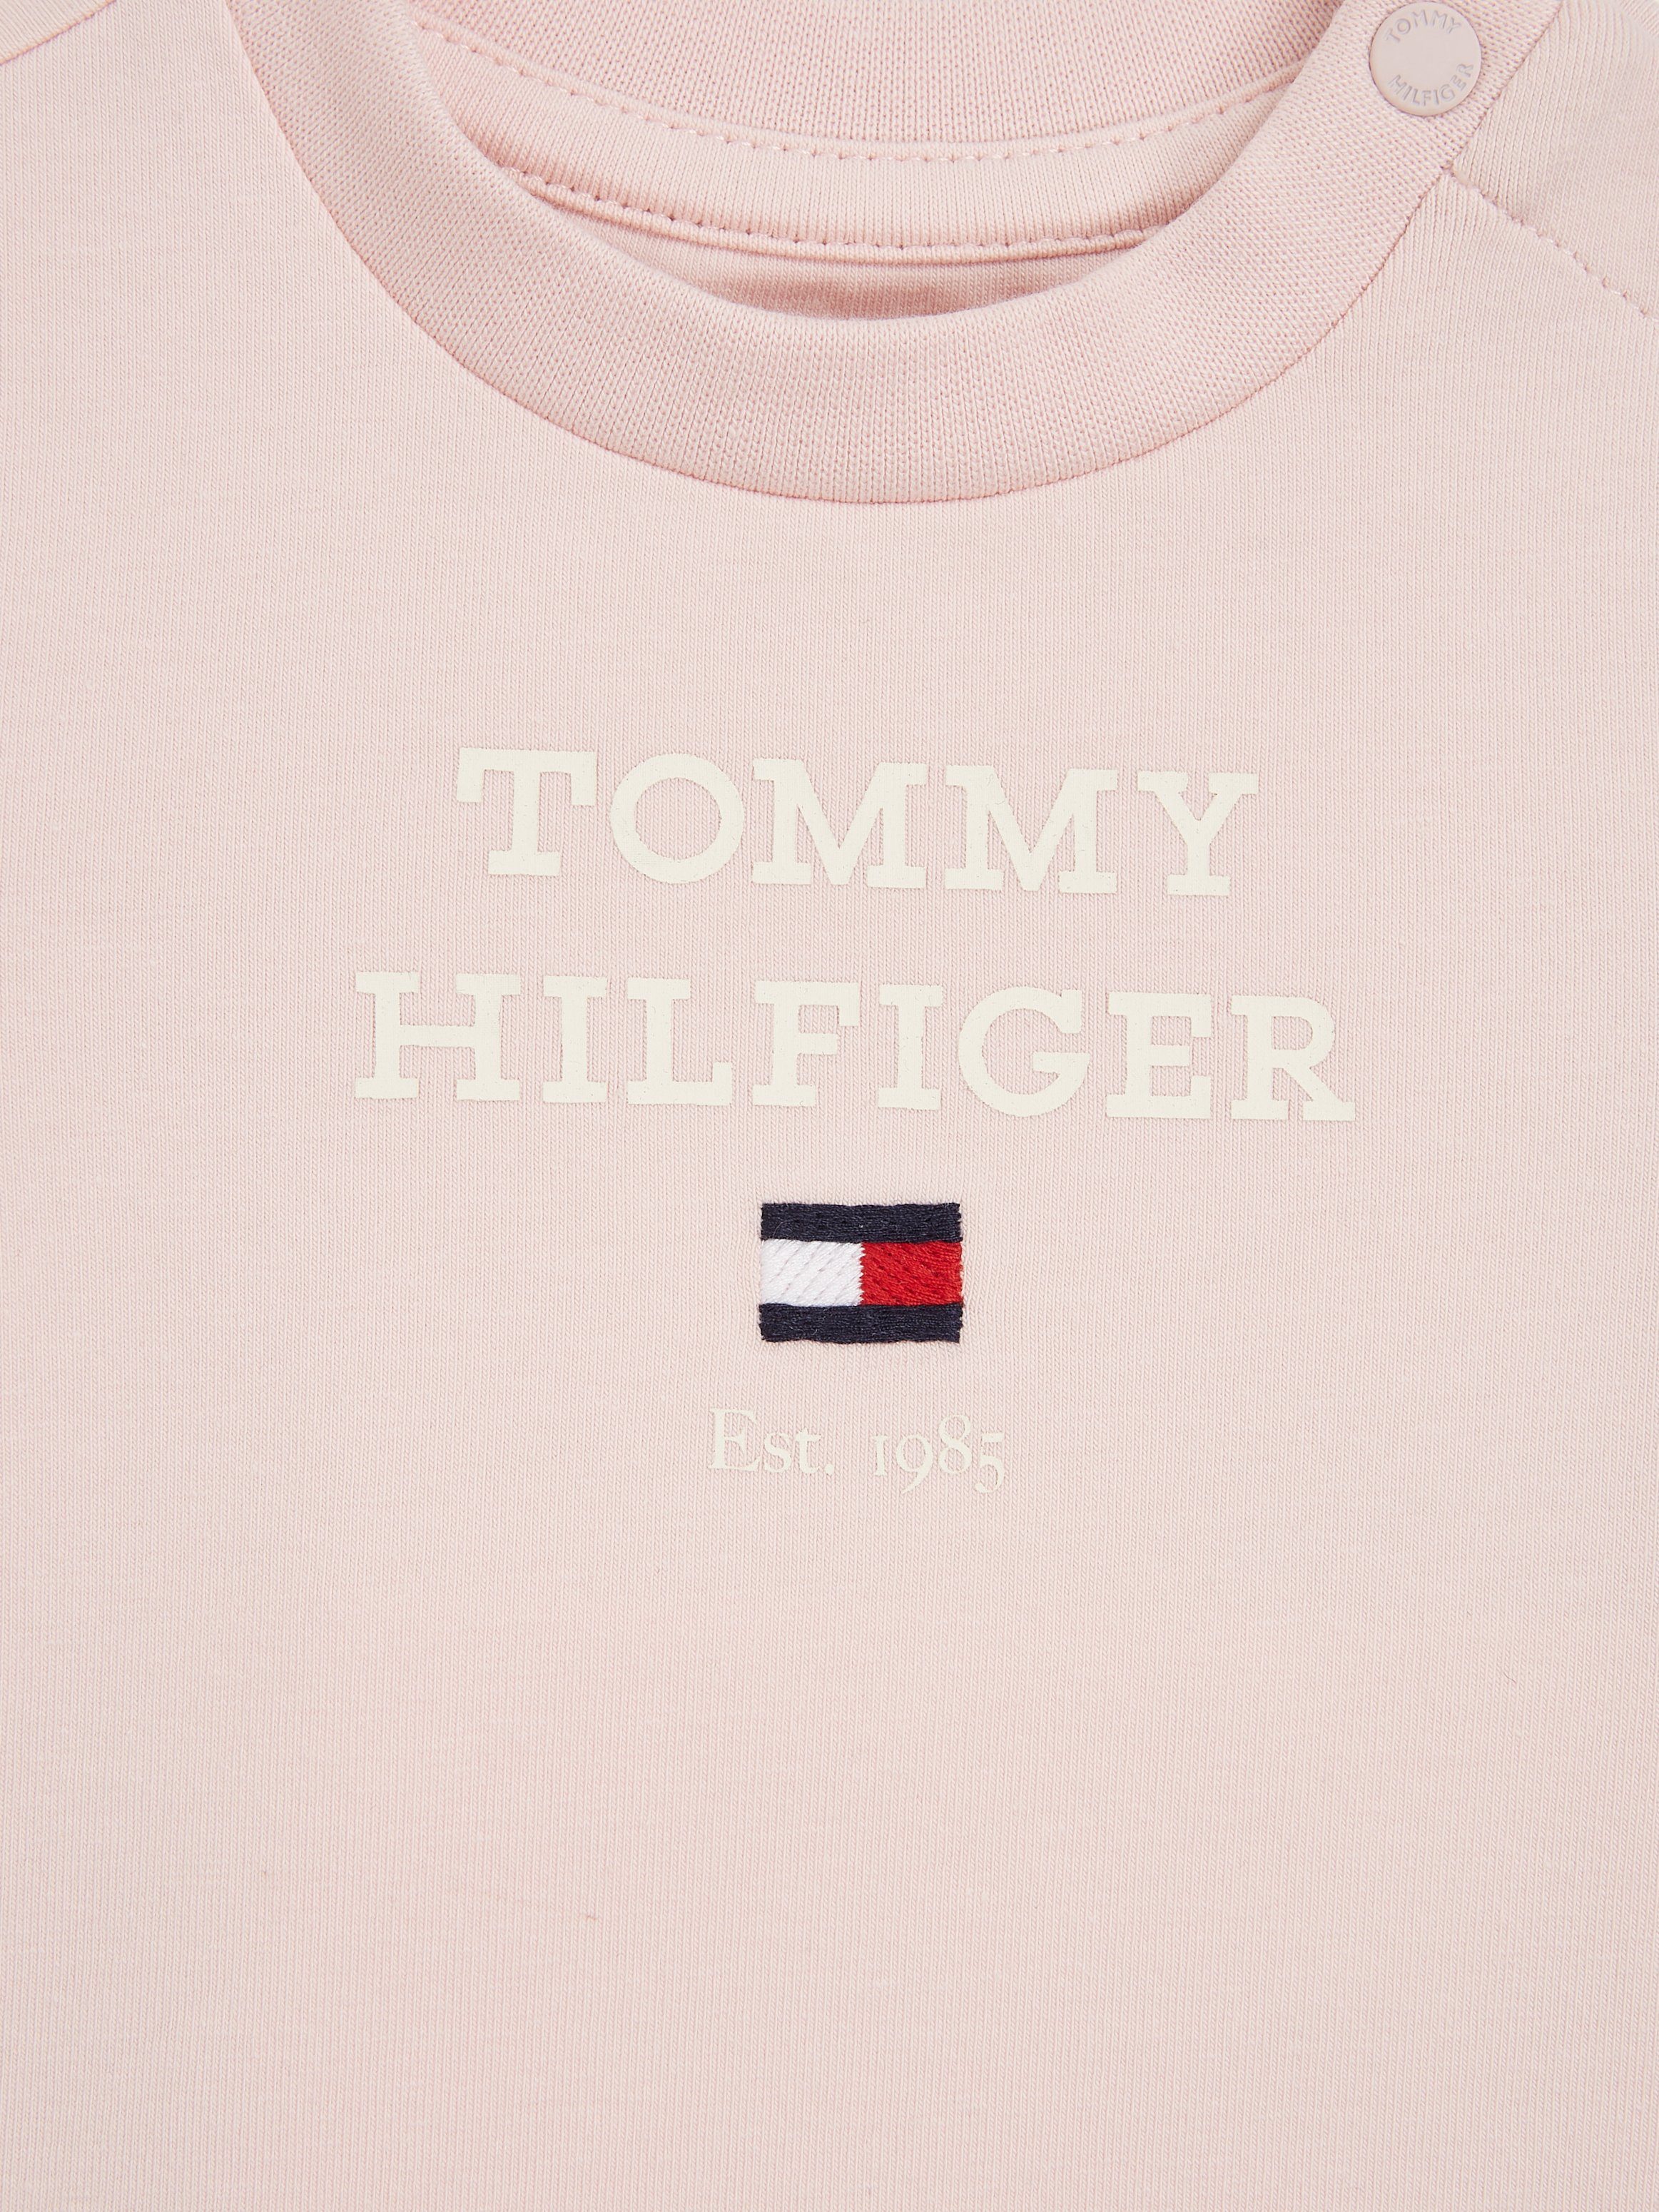 BABY Hilfiger TH LOGO Tommy Logoschriftzug Whimsy TEE mit Langarmshirt Pink L/S